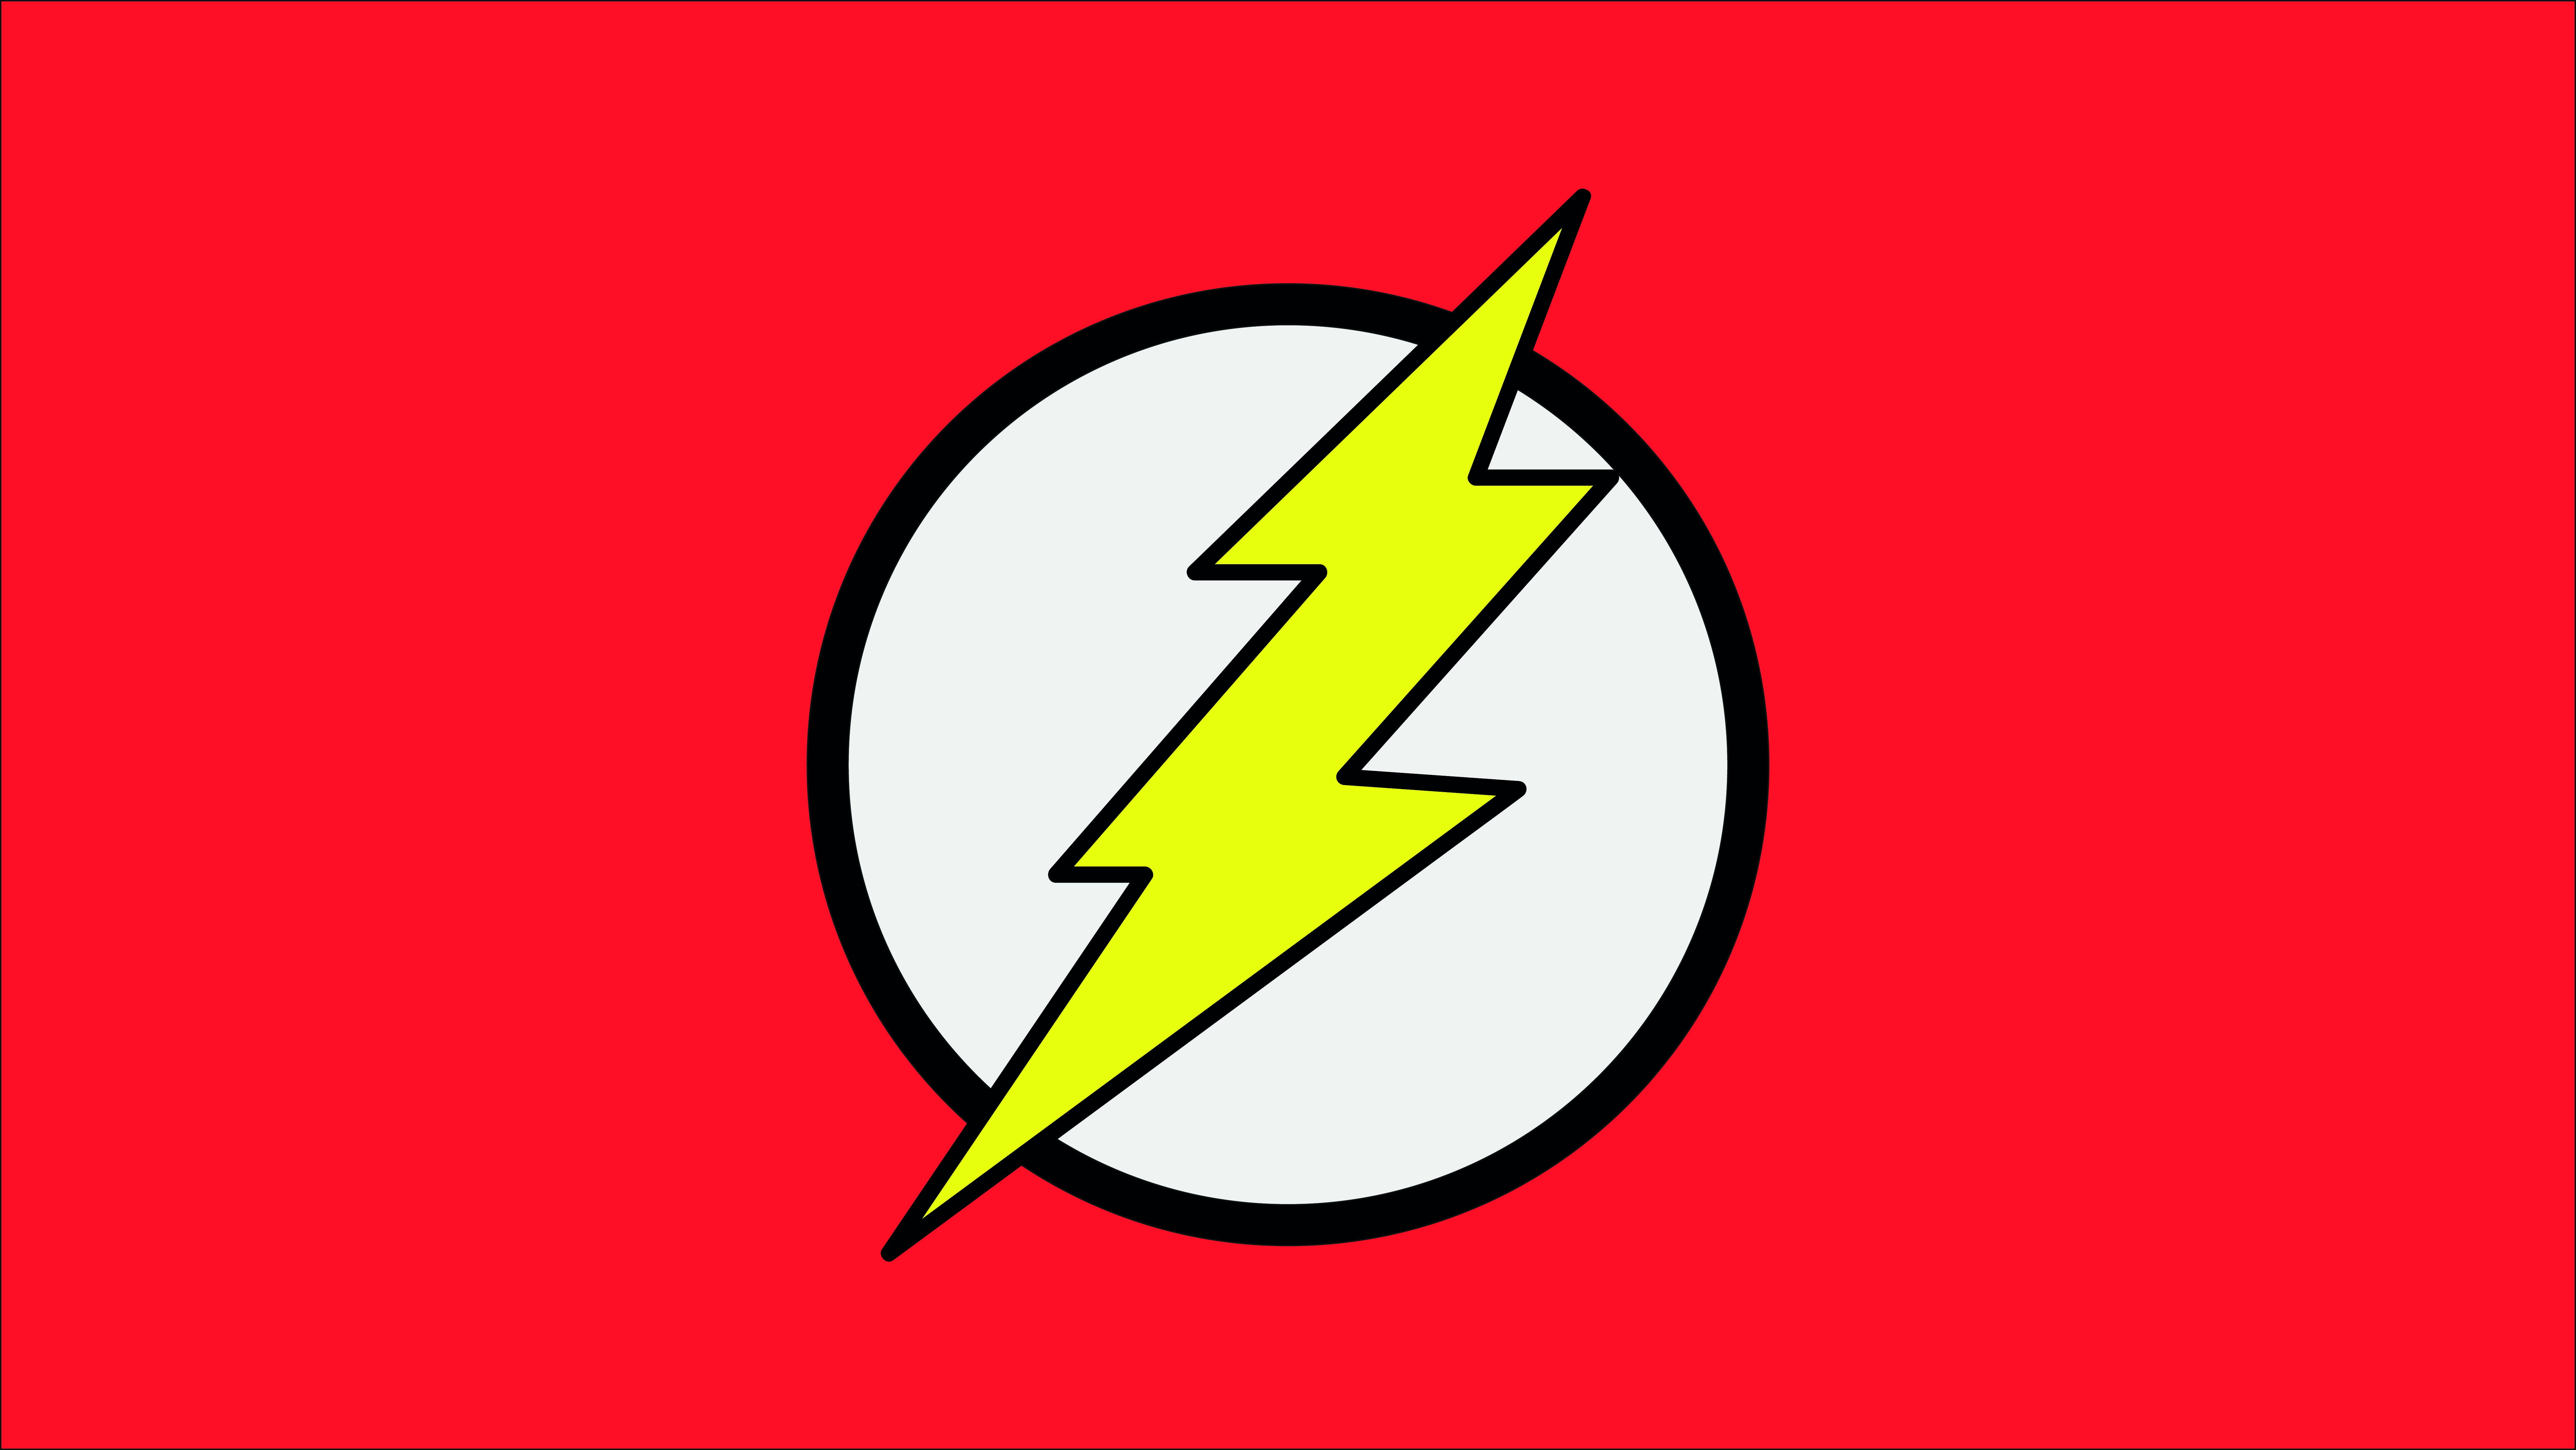 Flash, superhero, logo, symbol, communication, sign, studio shot